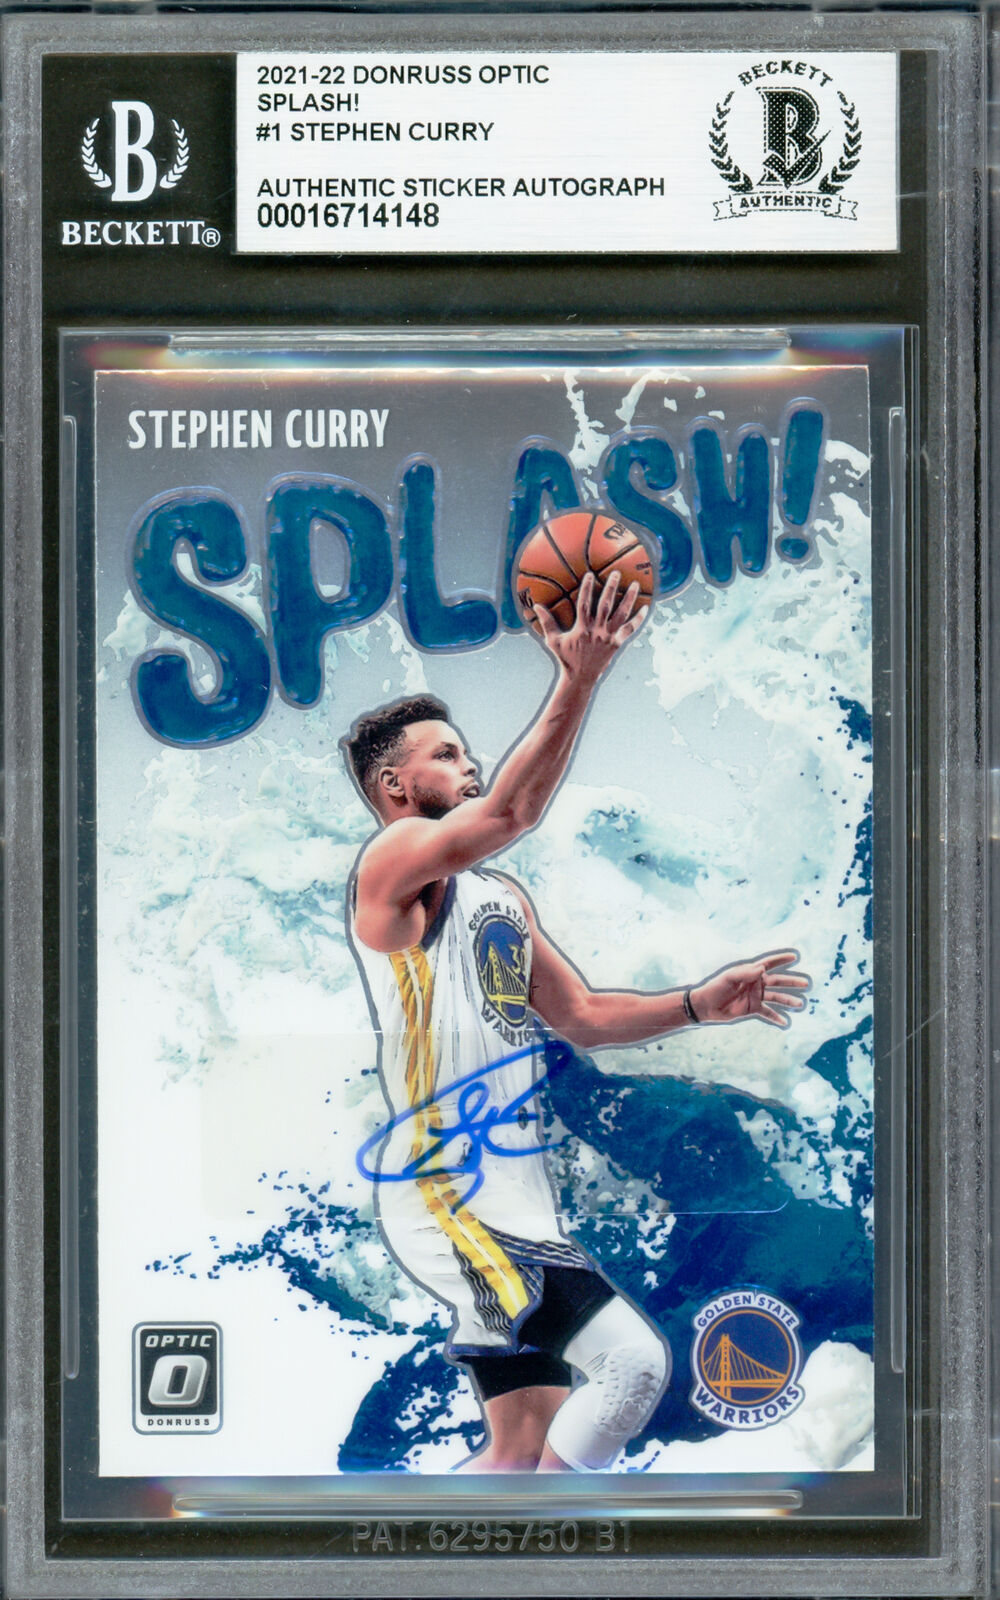 Stephen Curry Autographed 2021-22 Donruss Optic Splash Card Beckett 16714148 Image 1